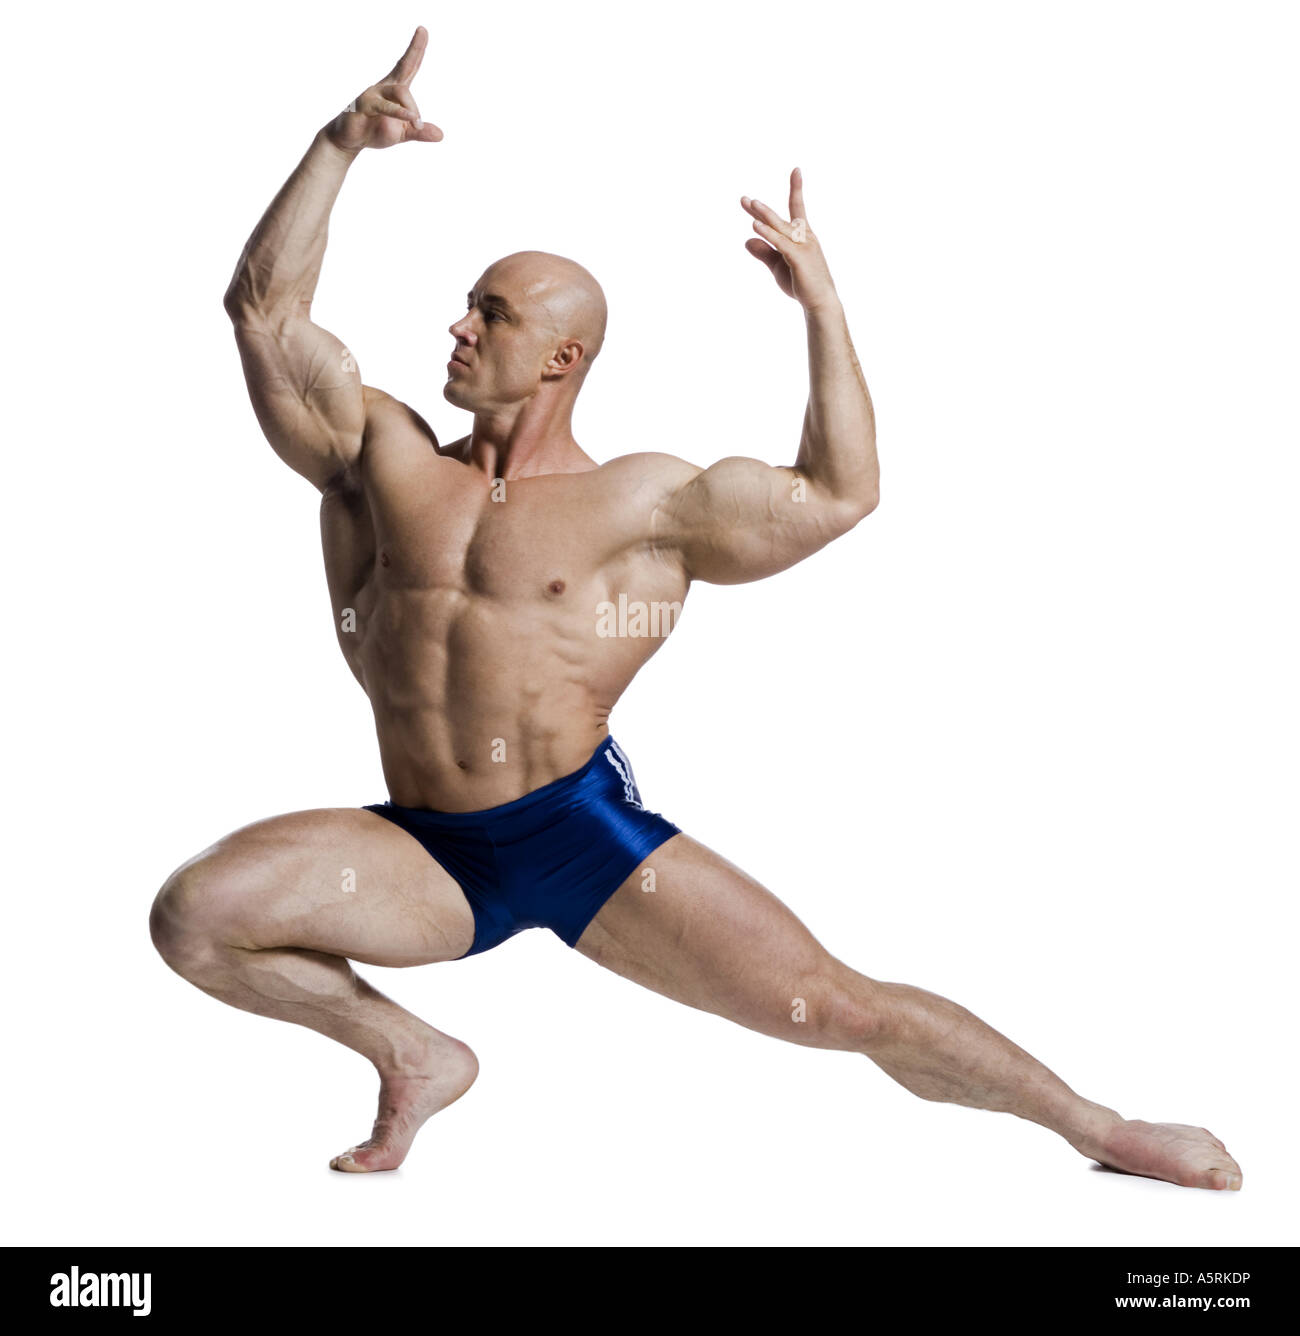 Bodybuilder Gym Poses Image & Photo (Free Trial) | Bigstock